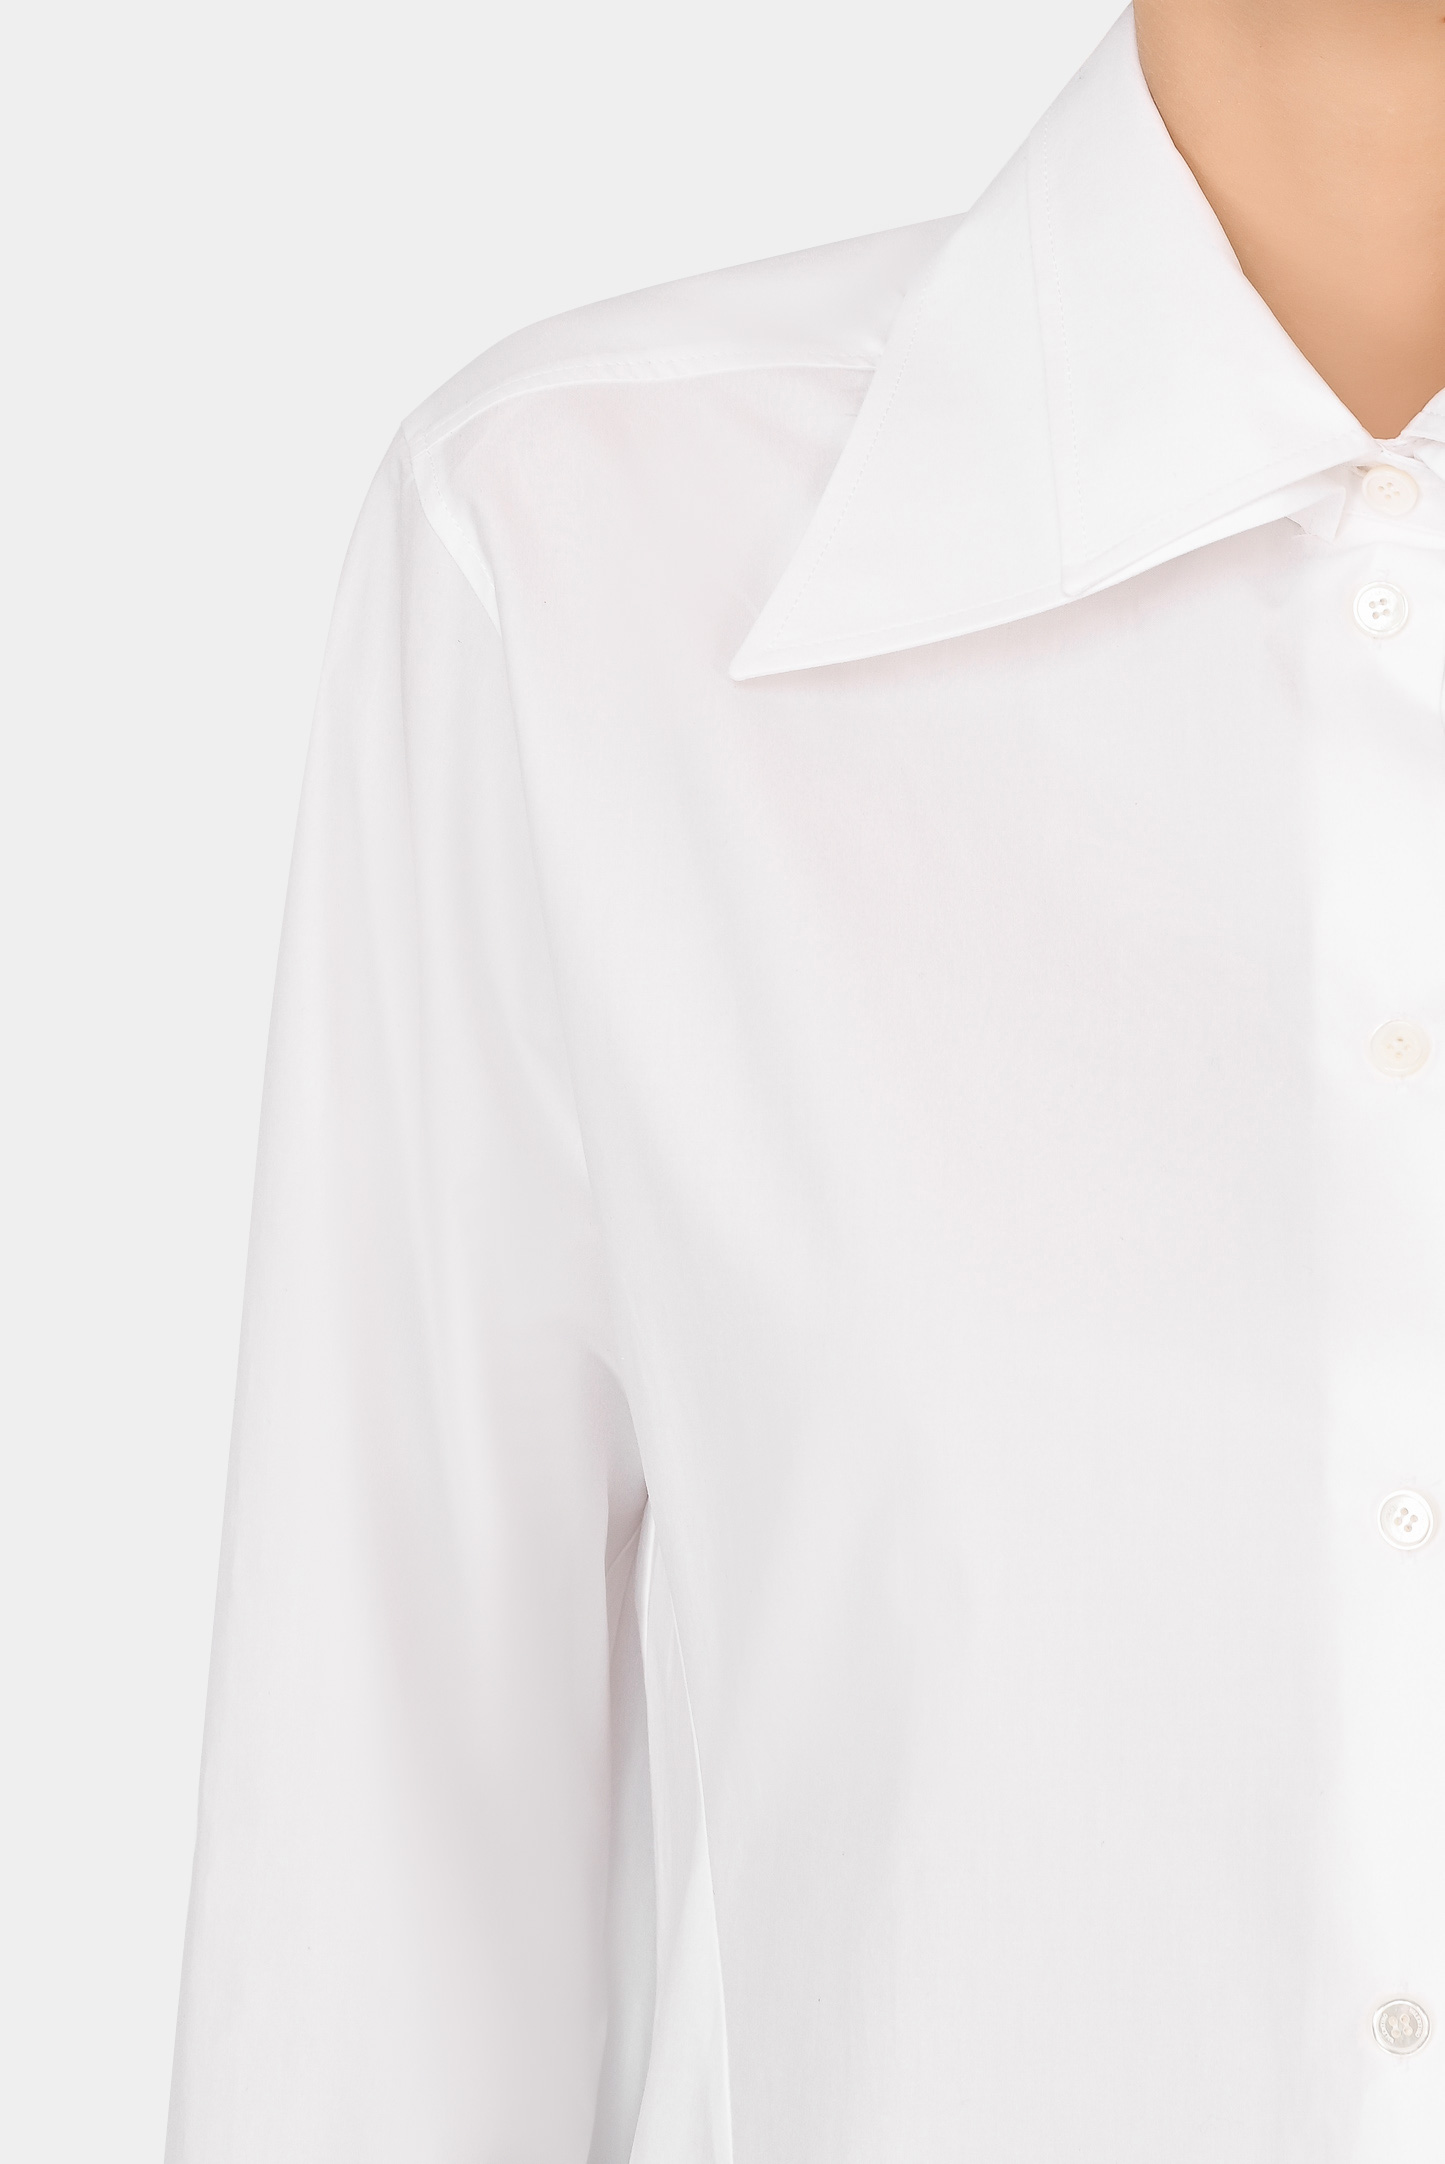 Рубашка VALENTINO PAP WB0AB2X55A6, цвет: Белый, Женский